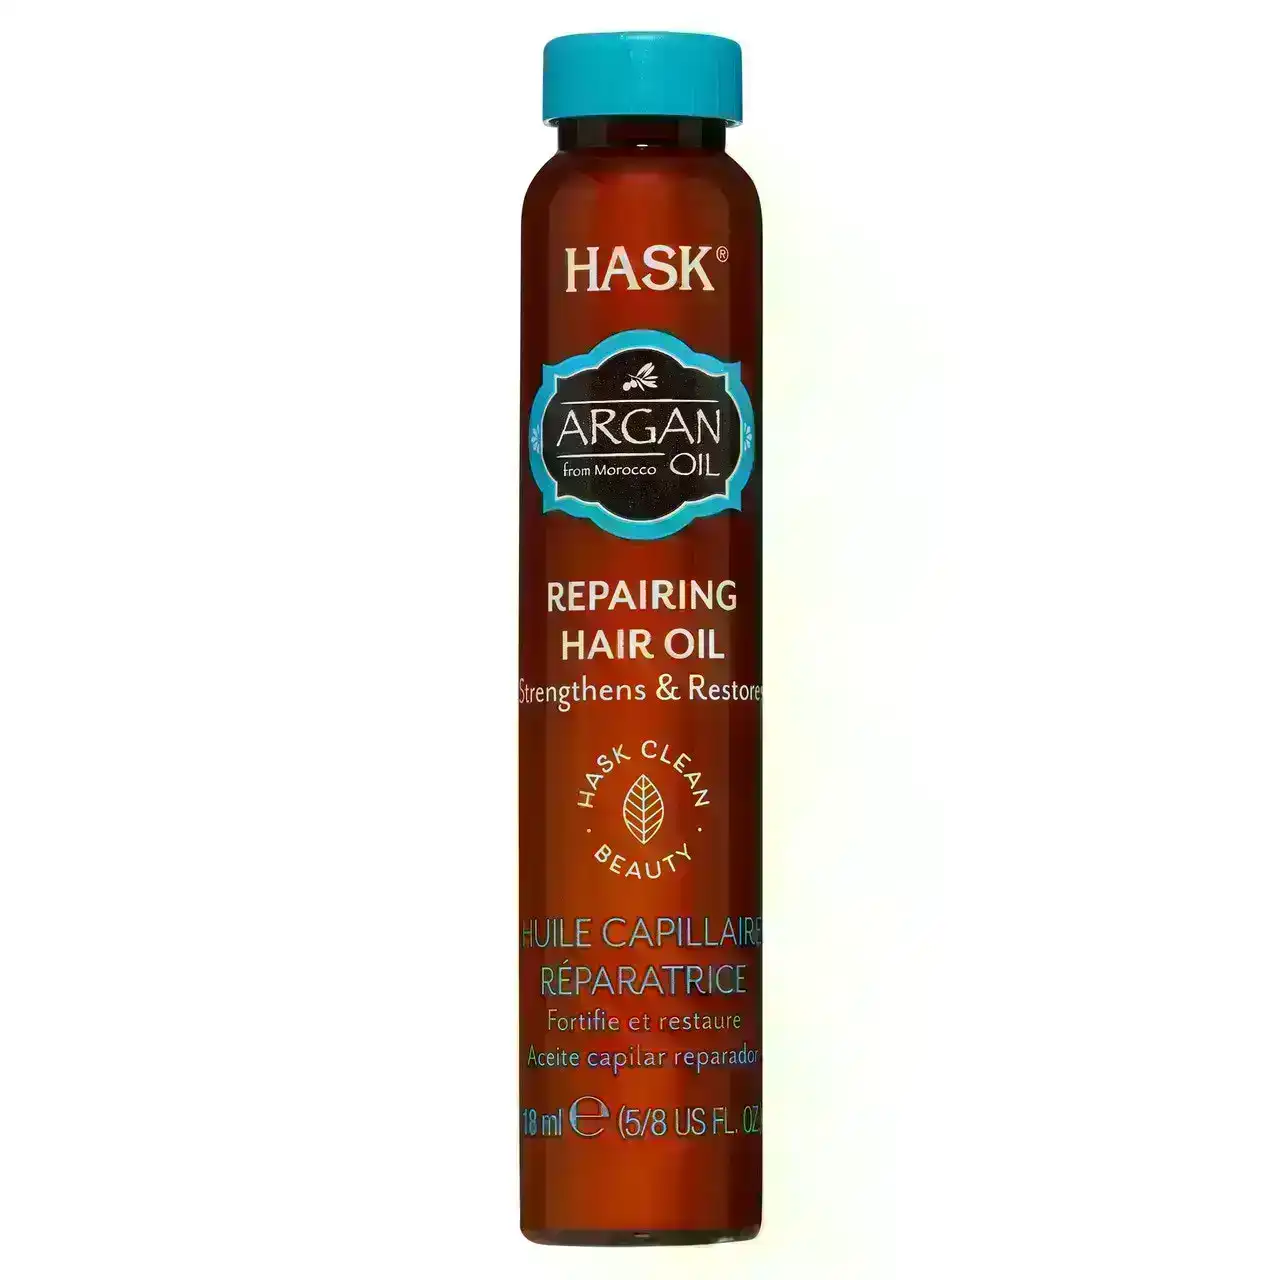 HASK Argan Oil Repairing Hair Oil Vial 18mL